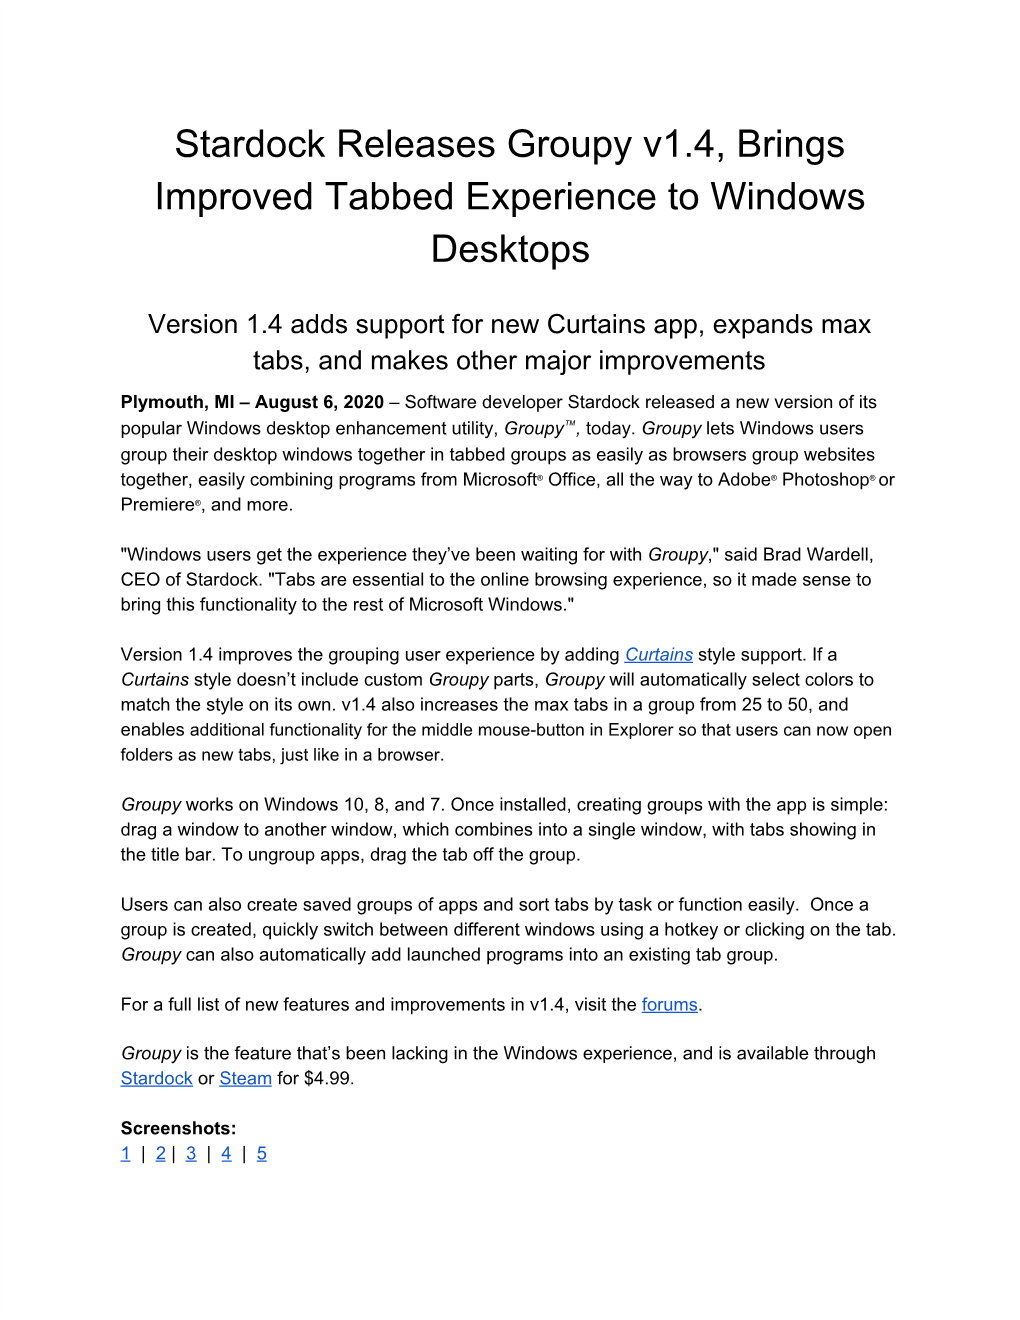 Stardock Releases Groupy V1.4, Brings Improved Tabbed Experience to Windows Desktops